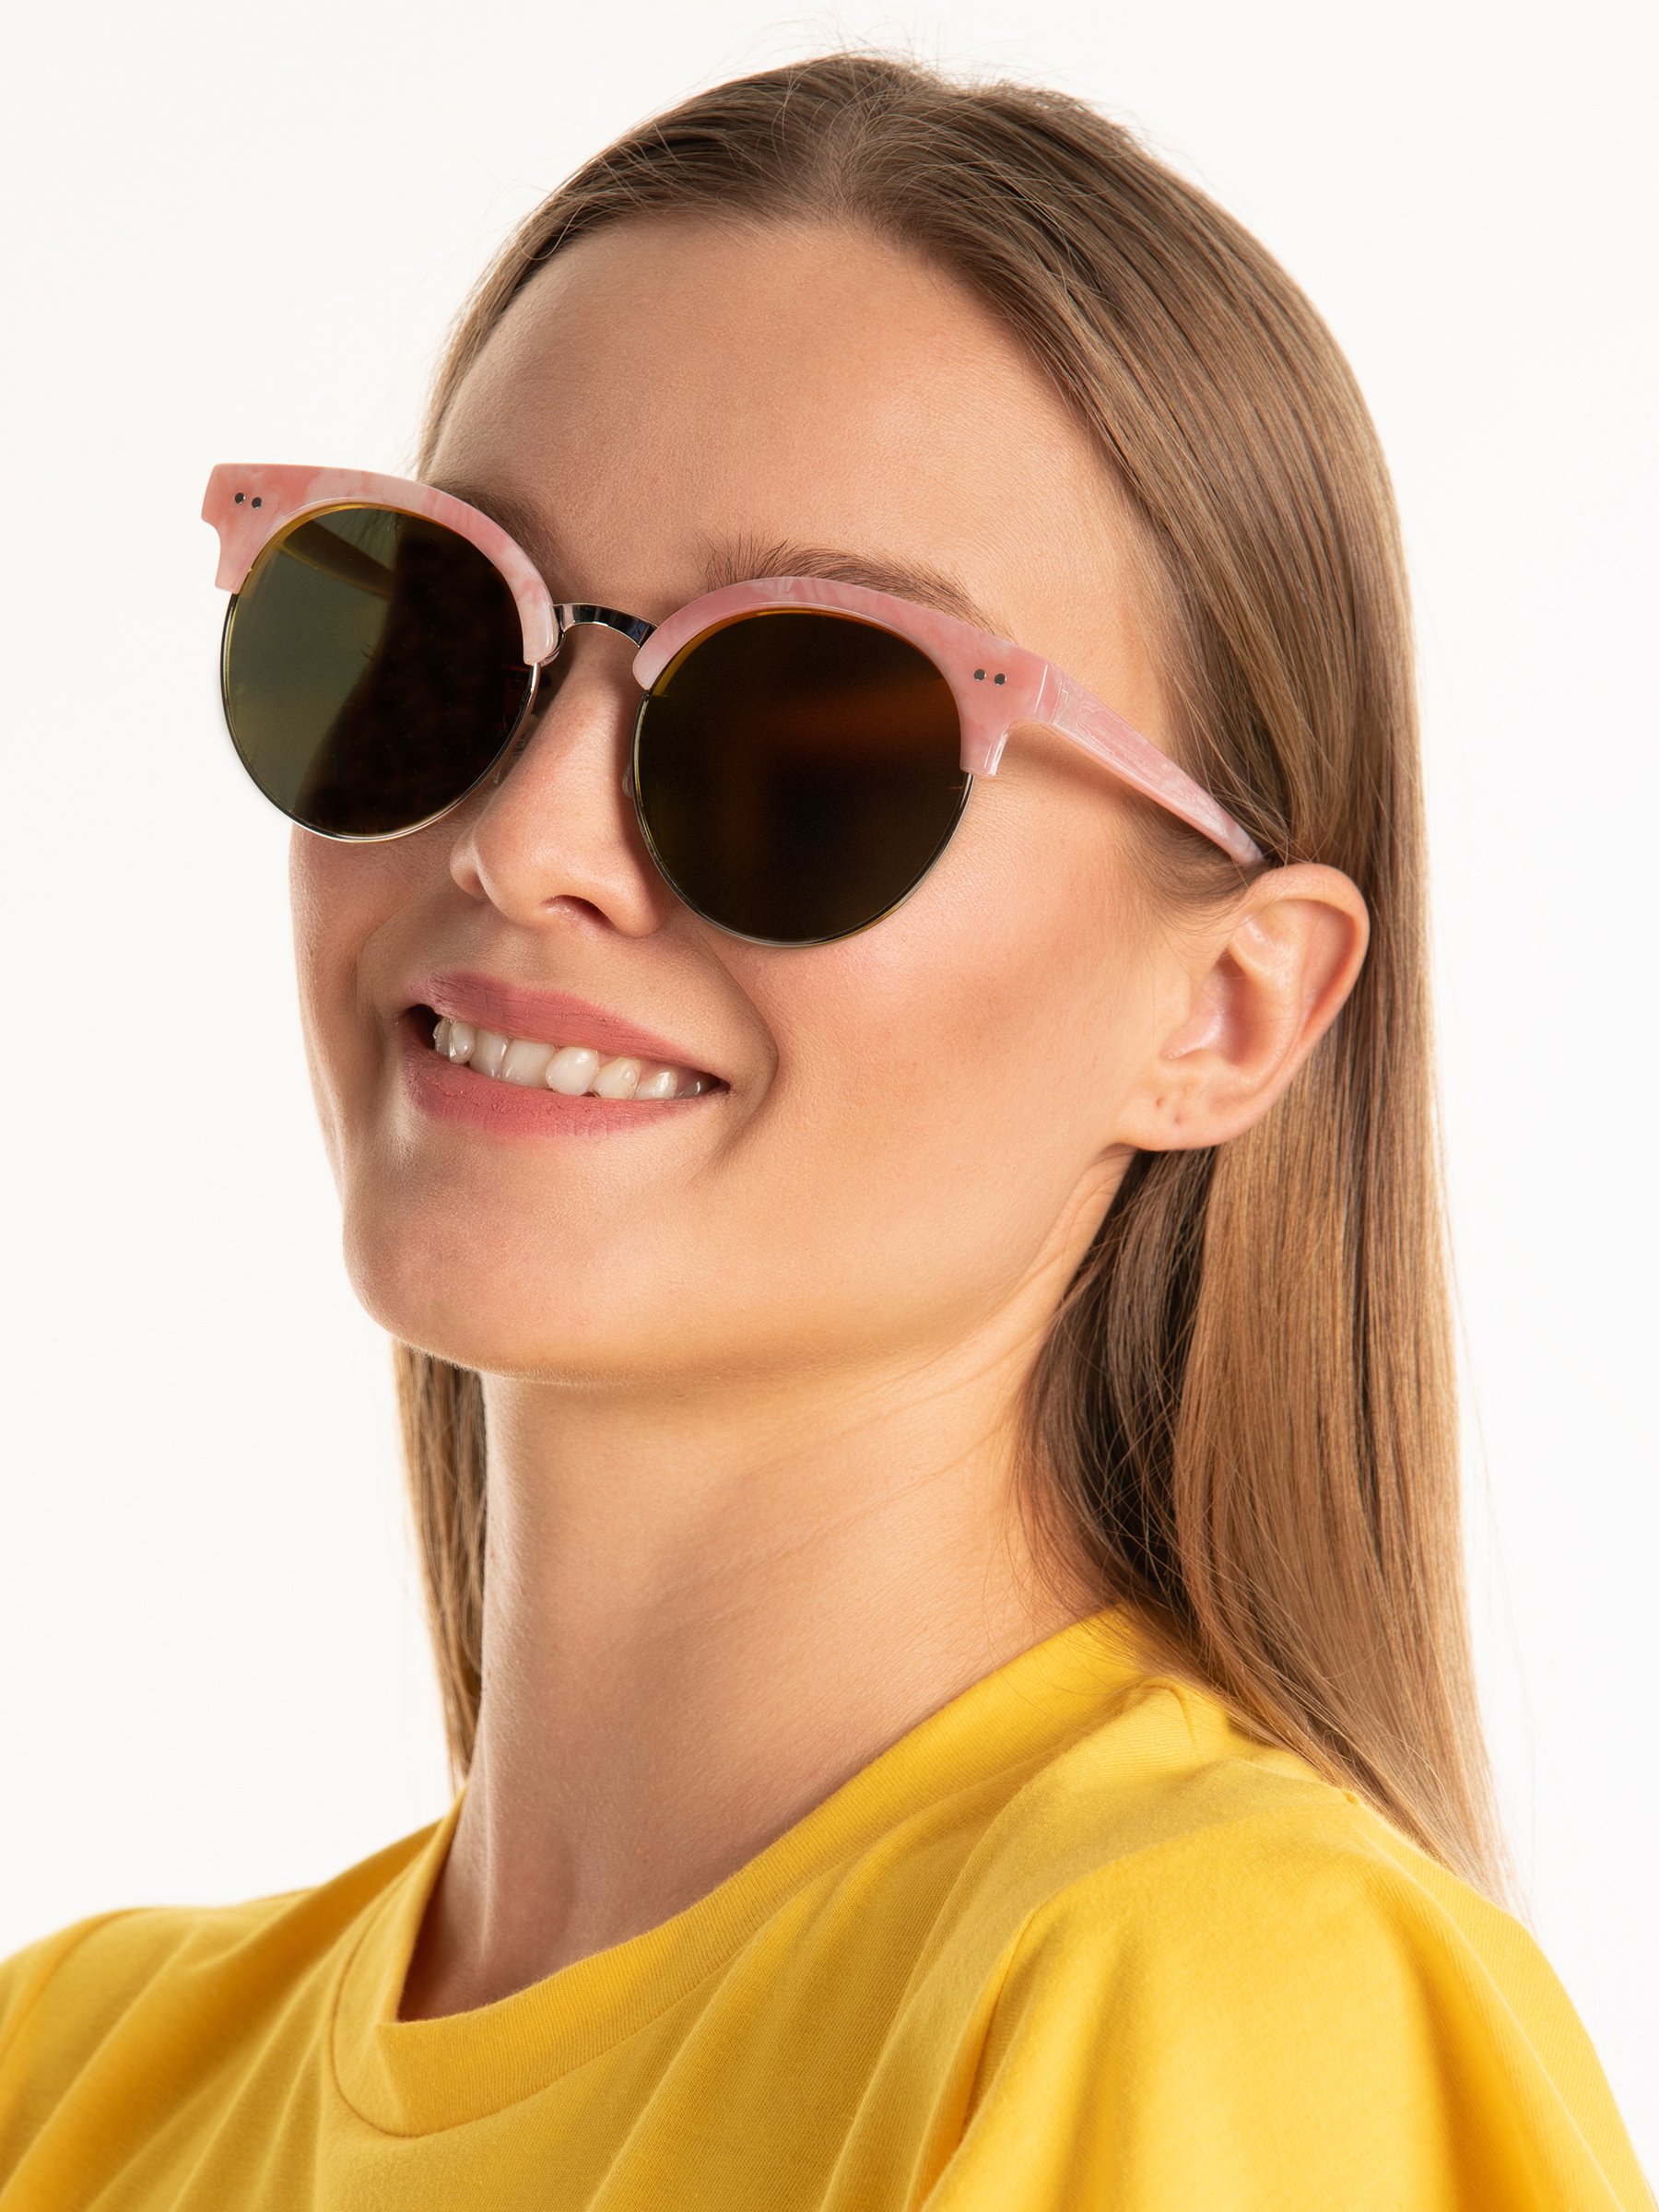 mirror effect sunglasses